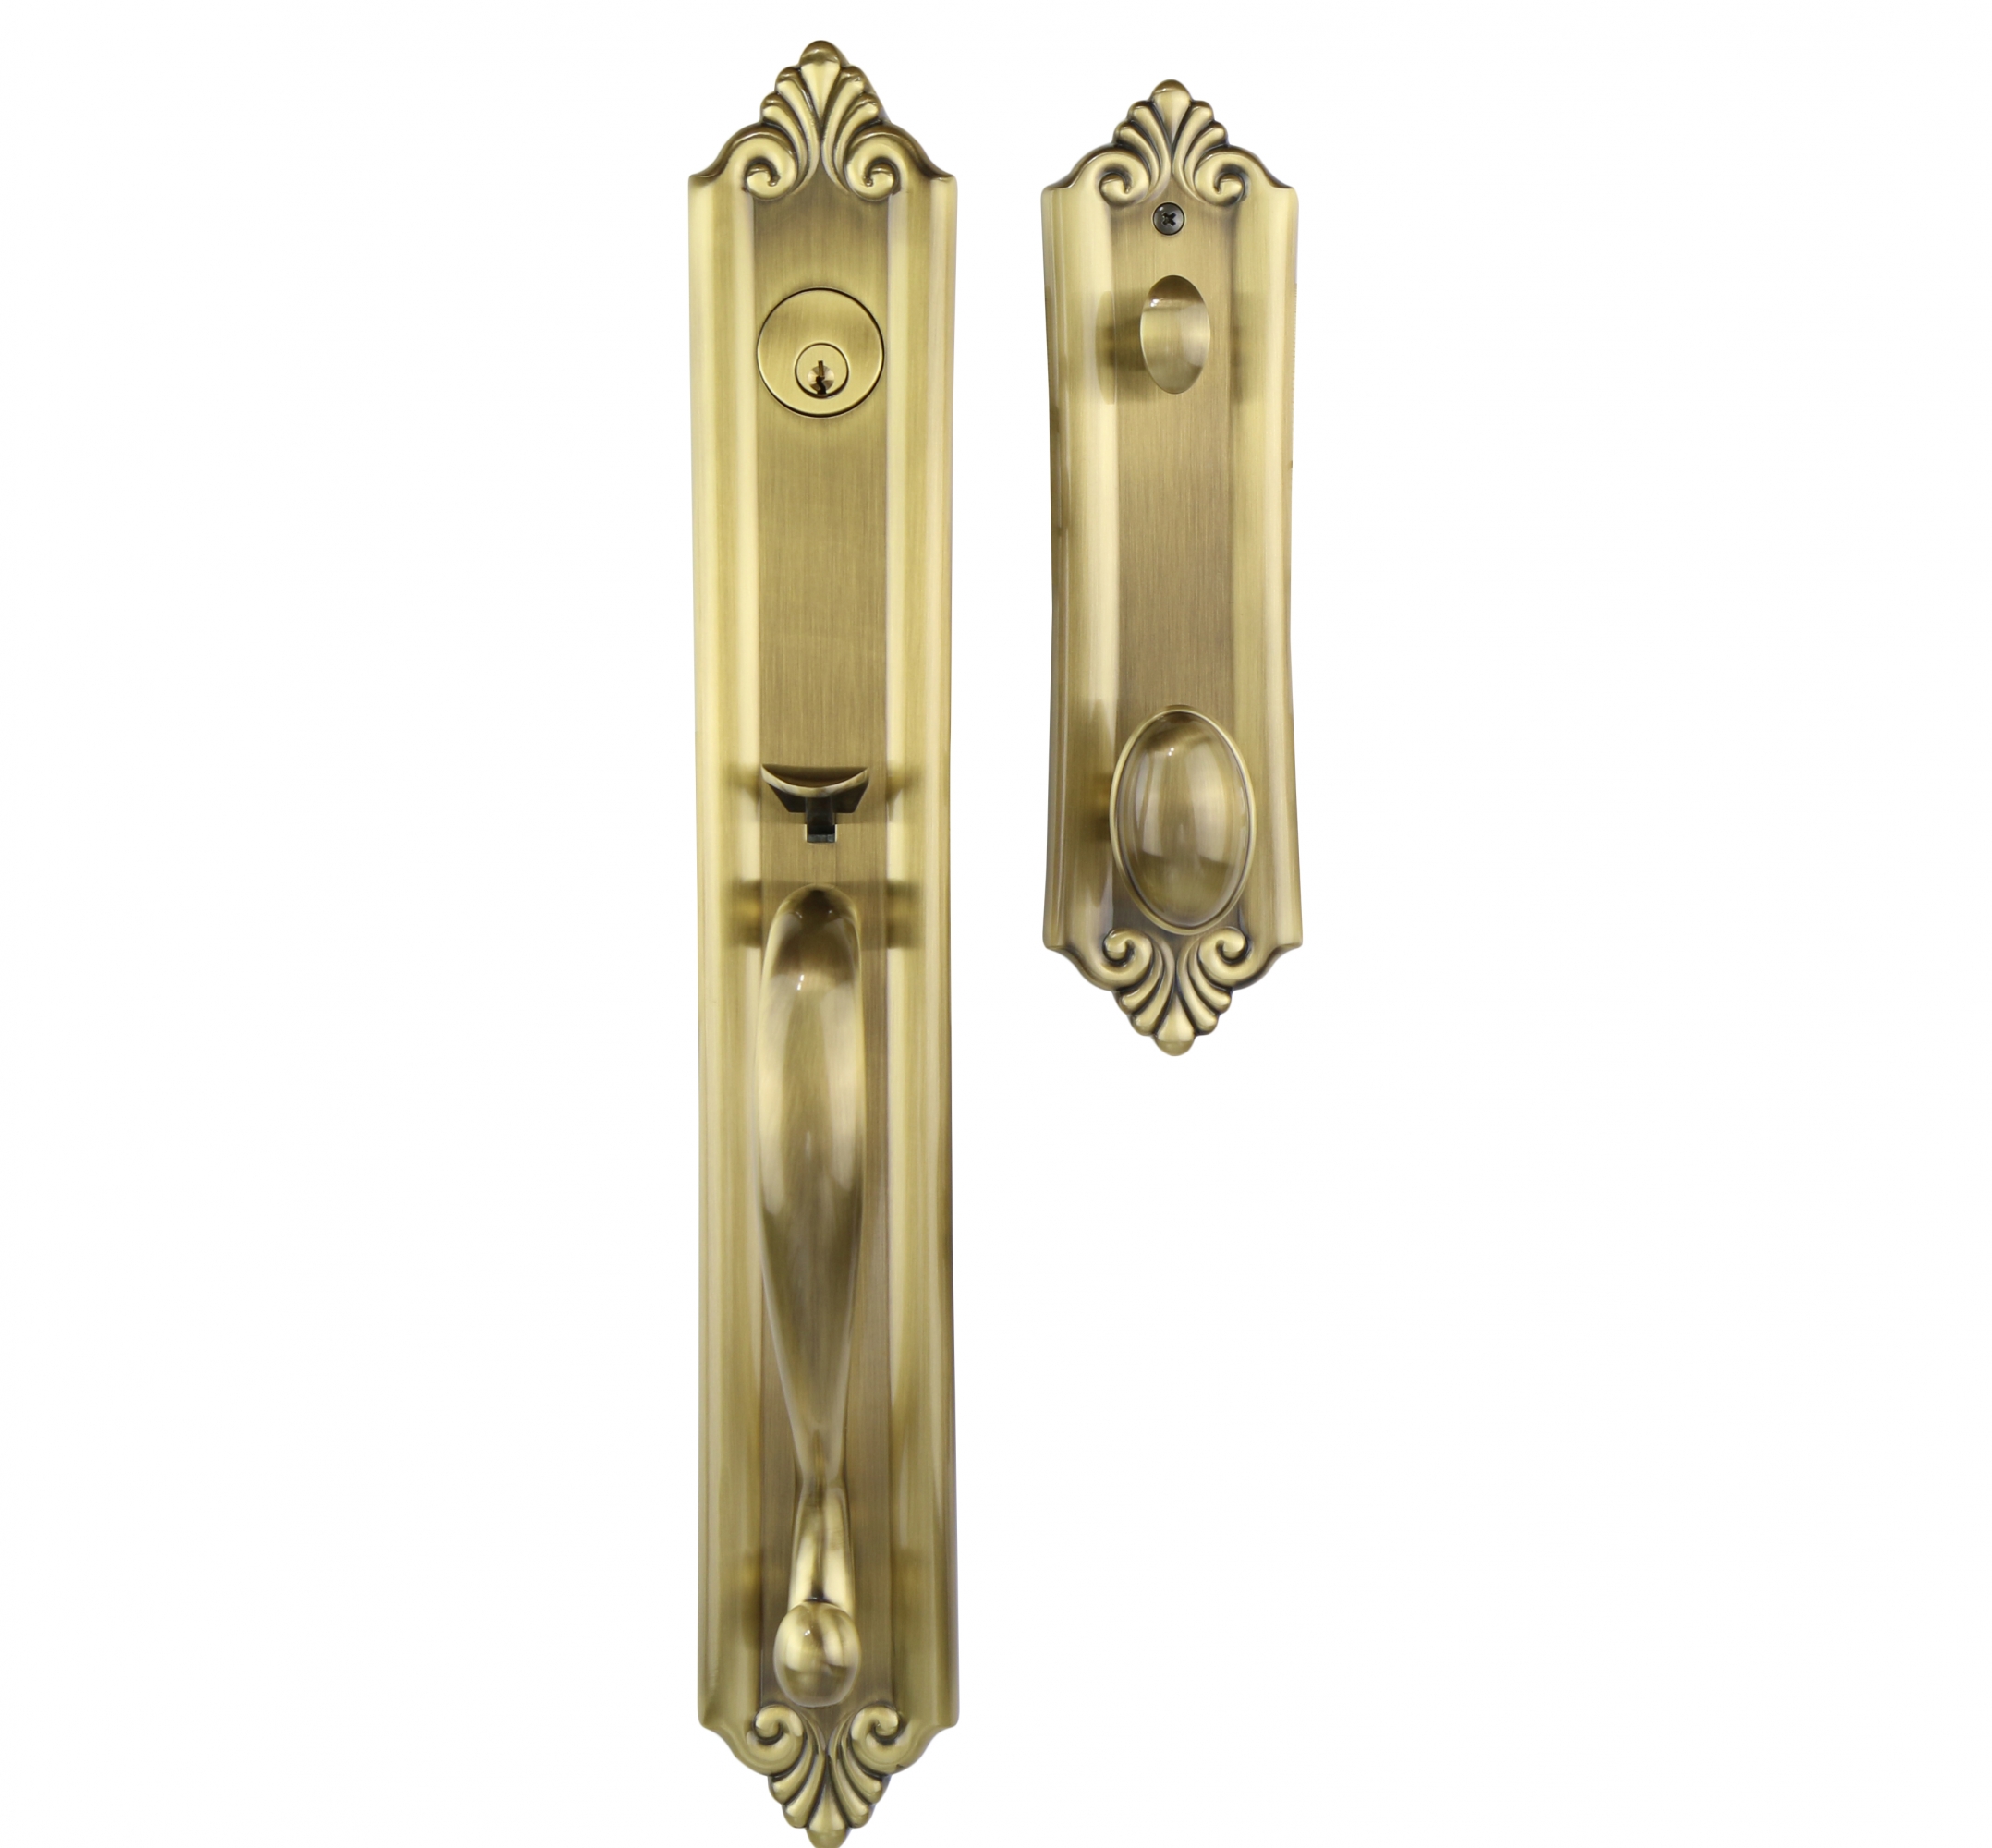 The Verona – Tubular – Antique Brass Entrance Handle Sets